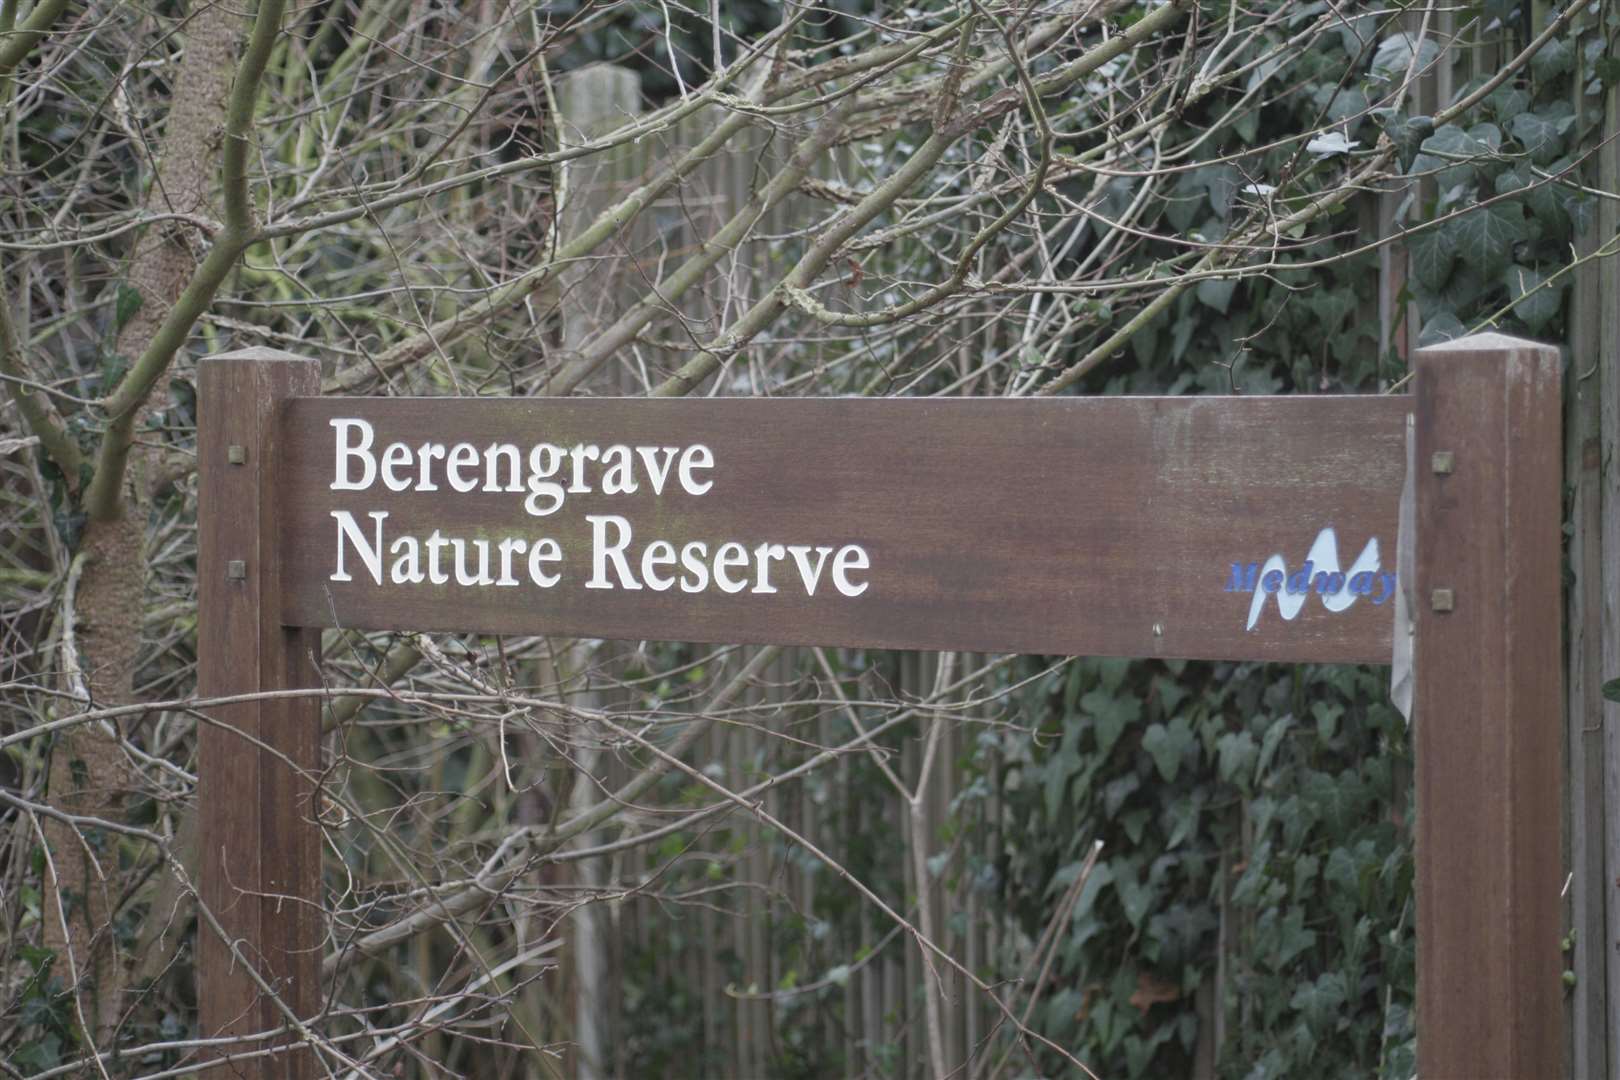 Put best foot forward at Medway's Berengrave Nature Reserve